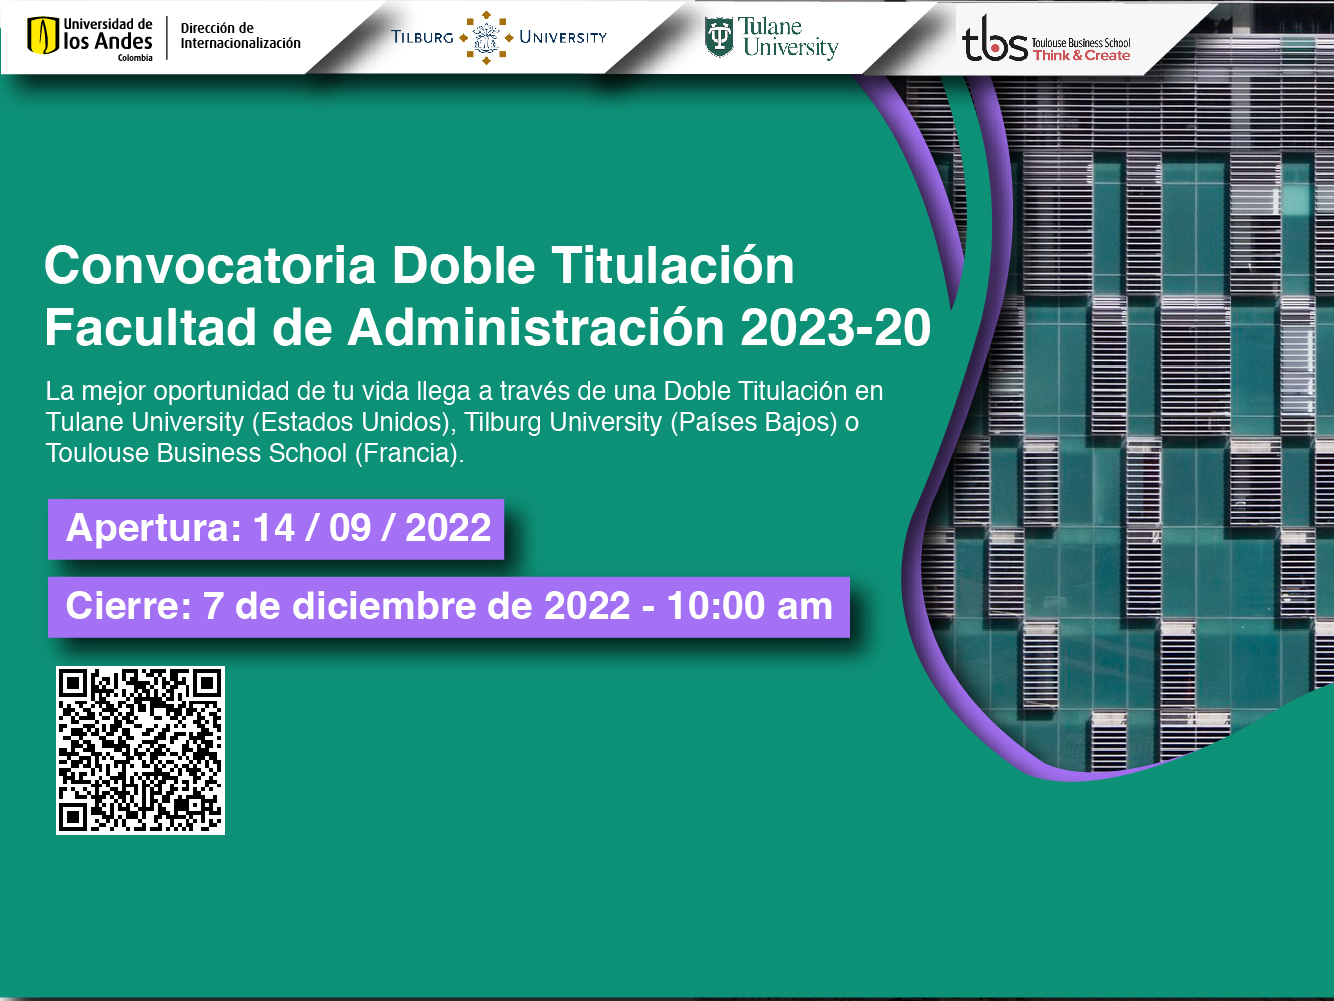 Convocatoria Doble Titulación Facultad de Administración 2023-20